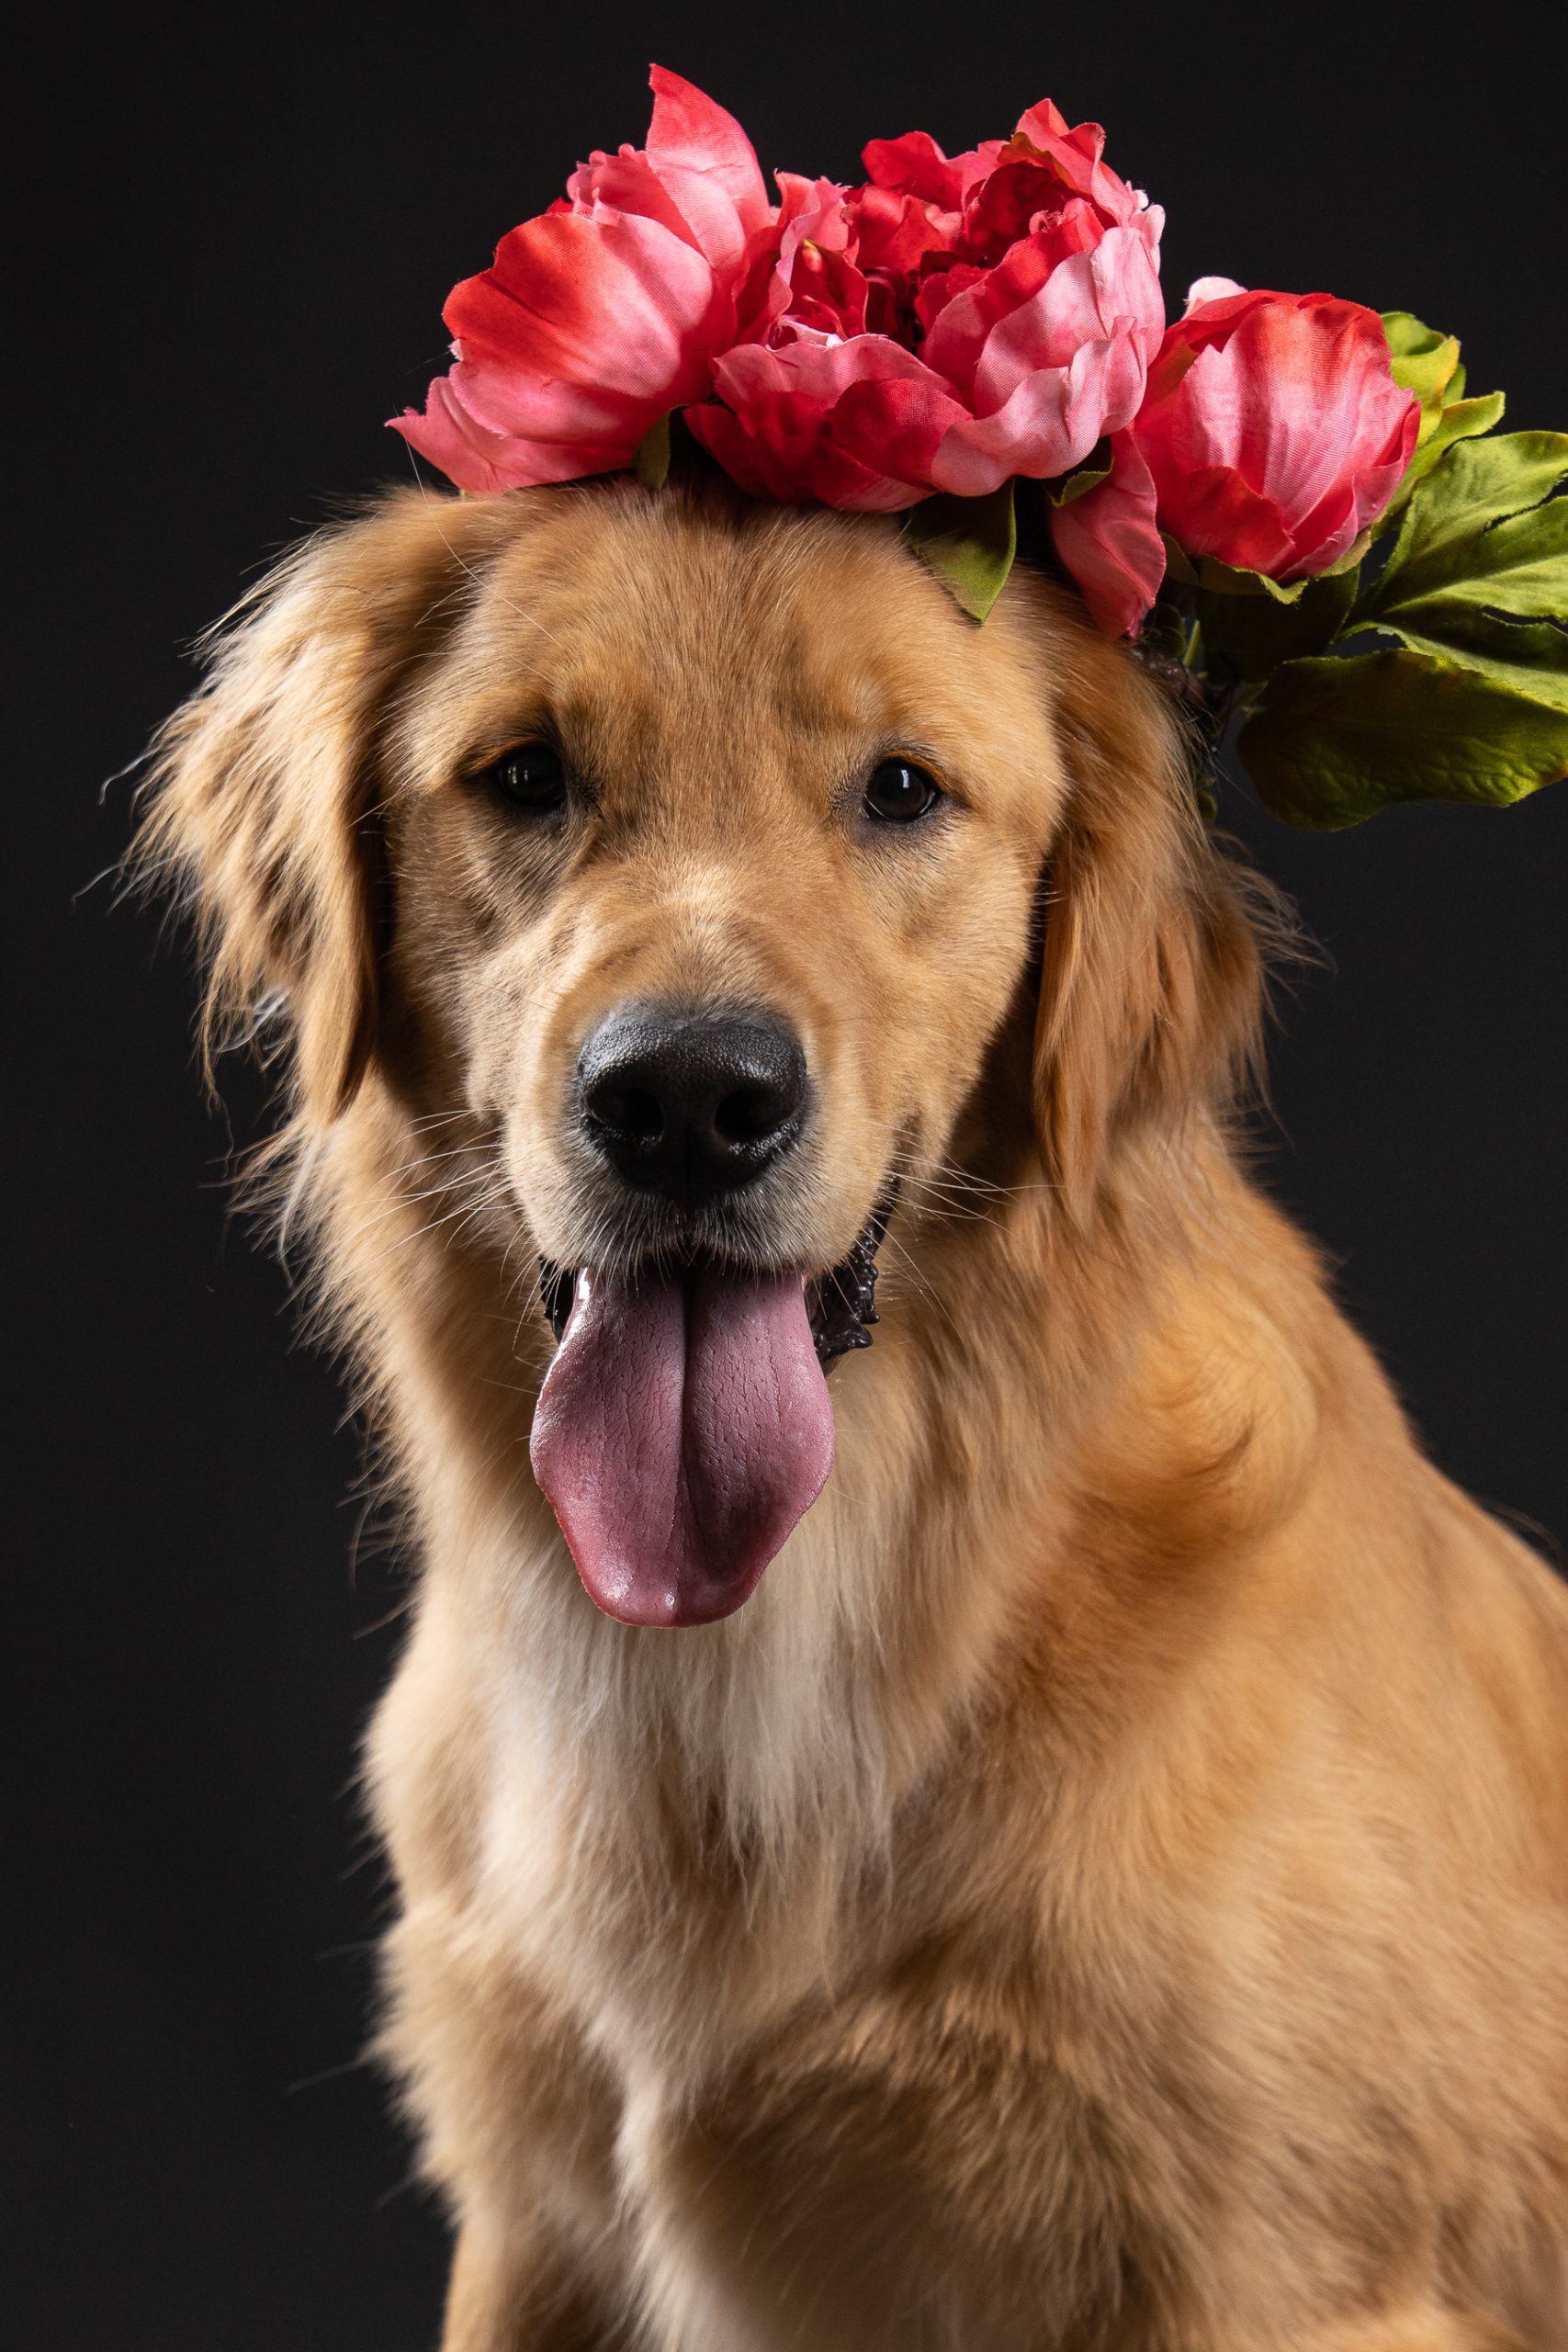 Dog with flowers portrait